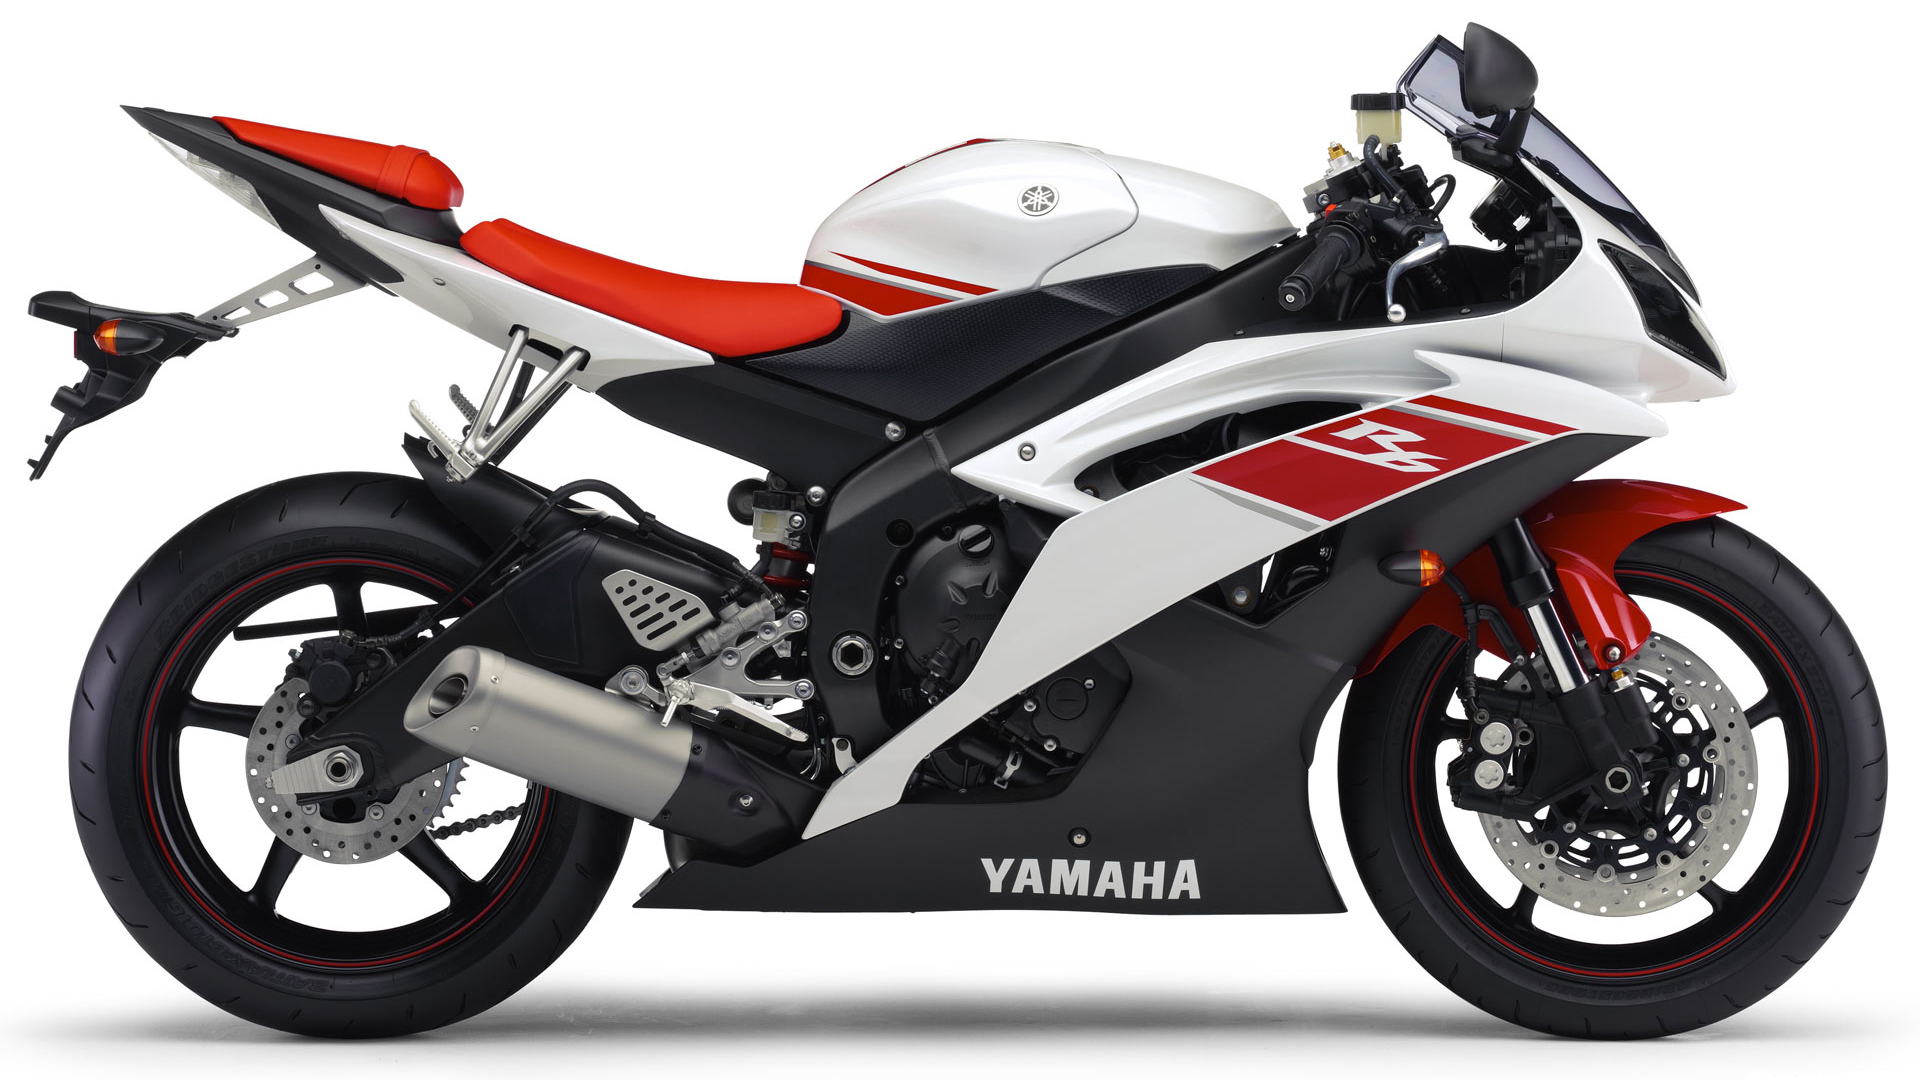 Yamaha Motorcycle Desktop Wallpaper - High Definition, High Resolution